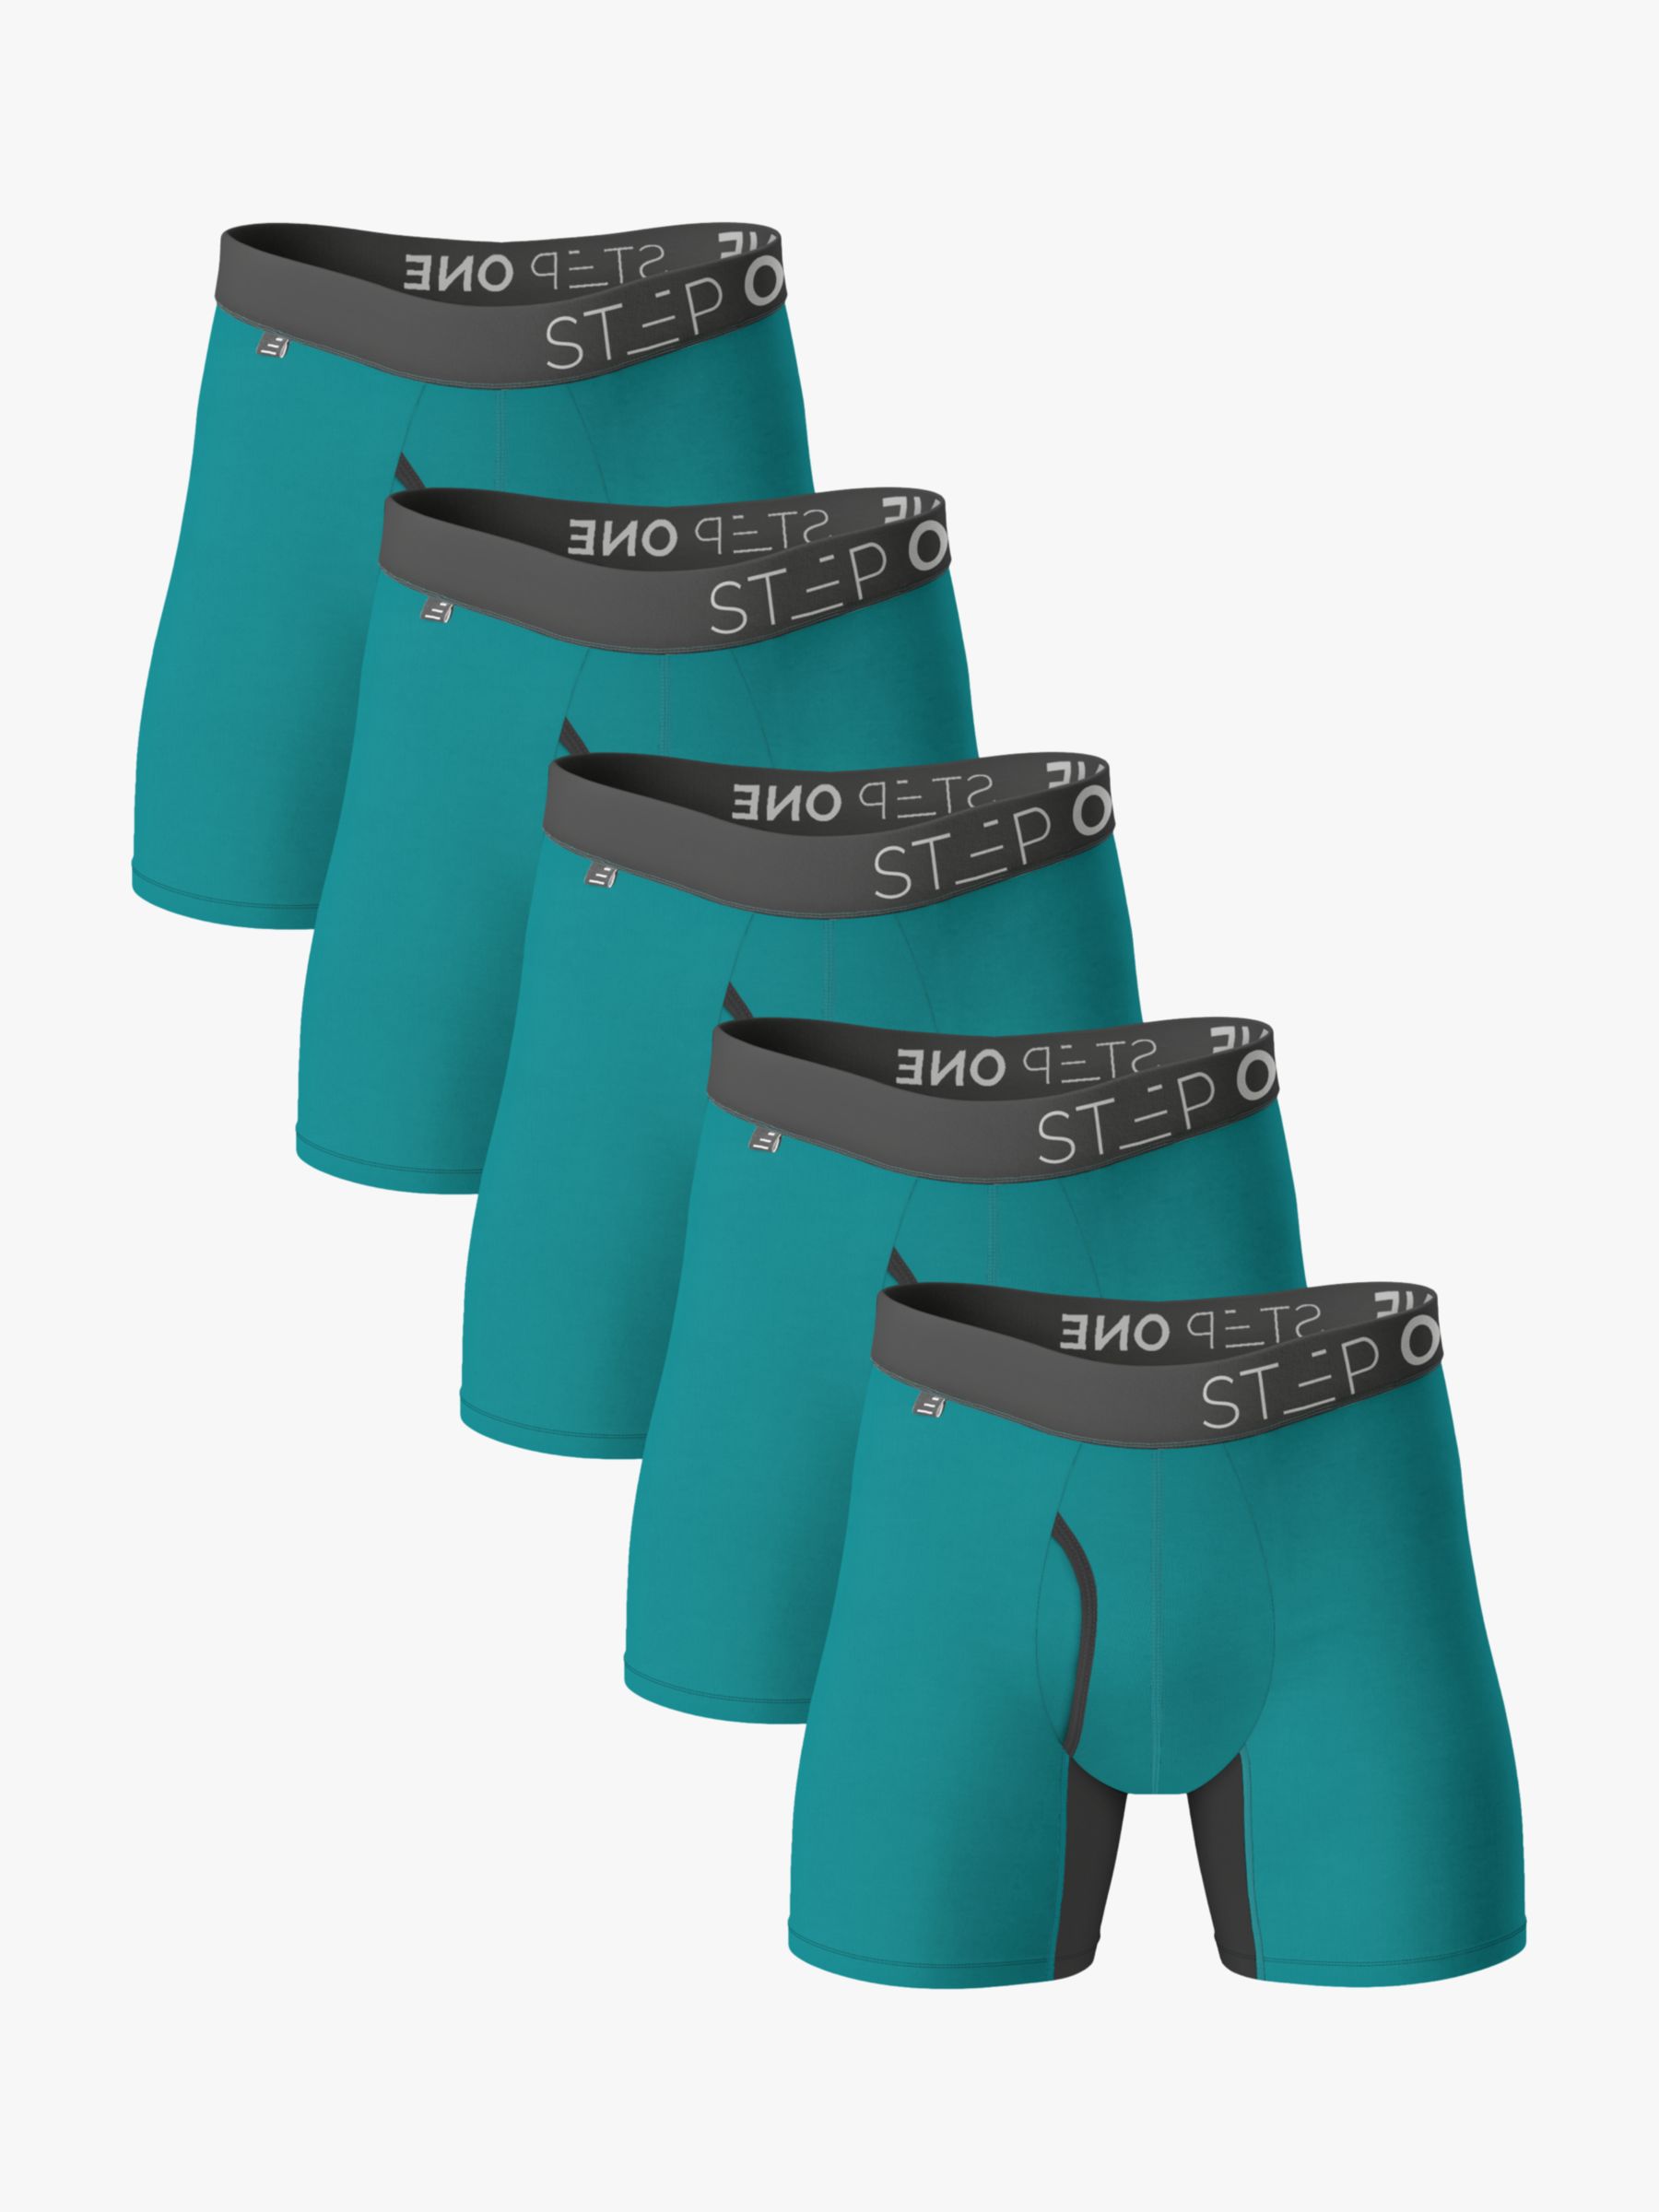 Step One Men's Bamboo Underwear Boxer Brief - Black Currants